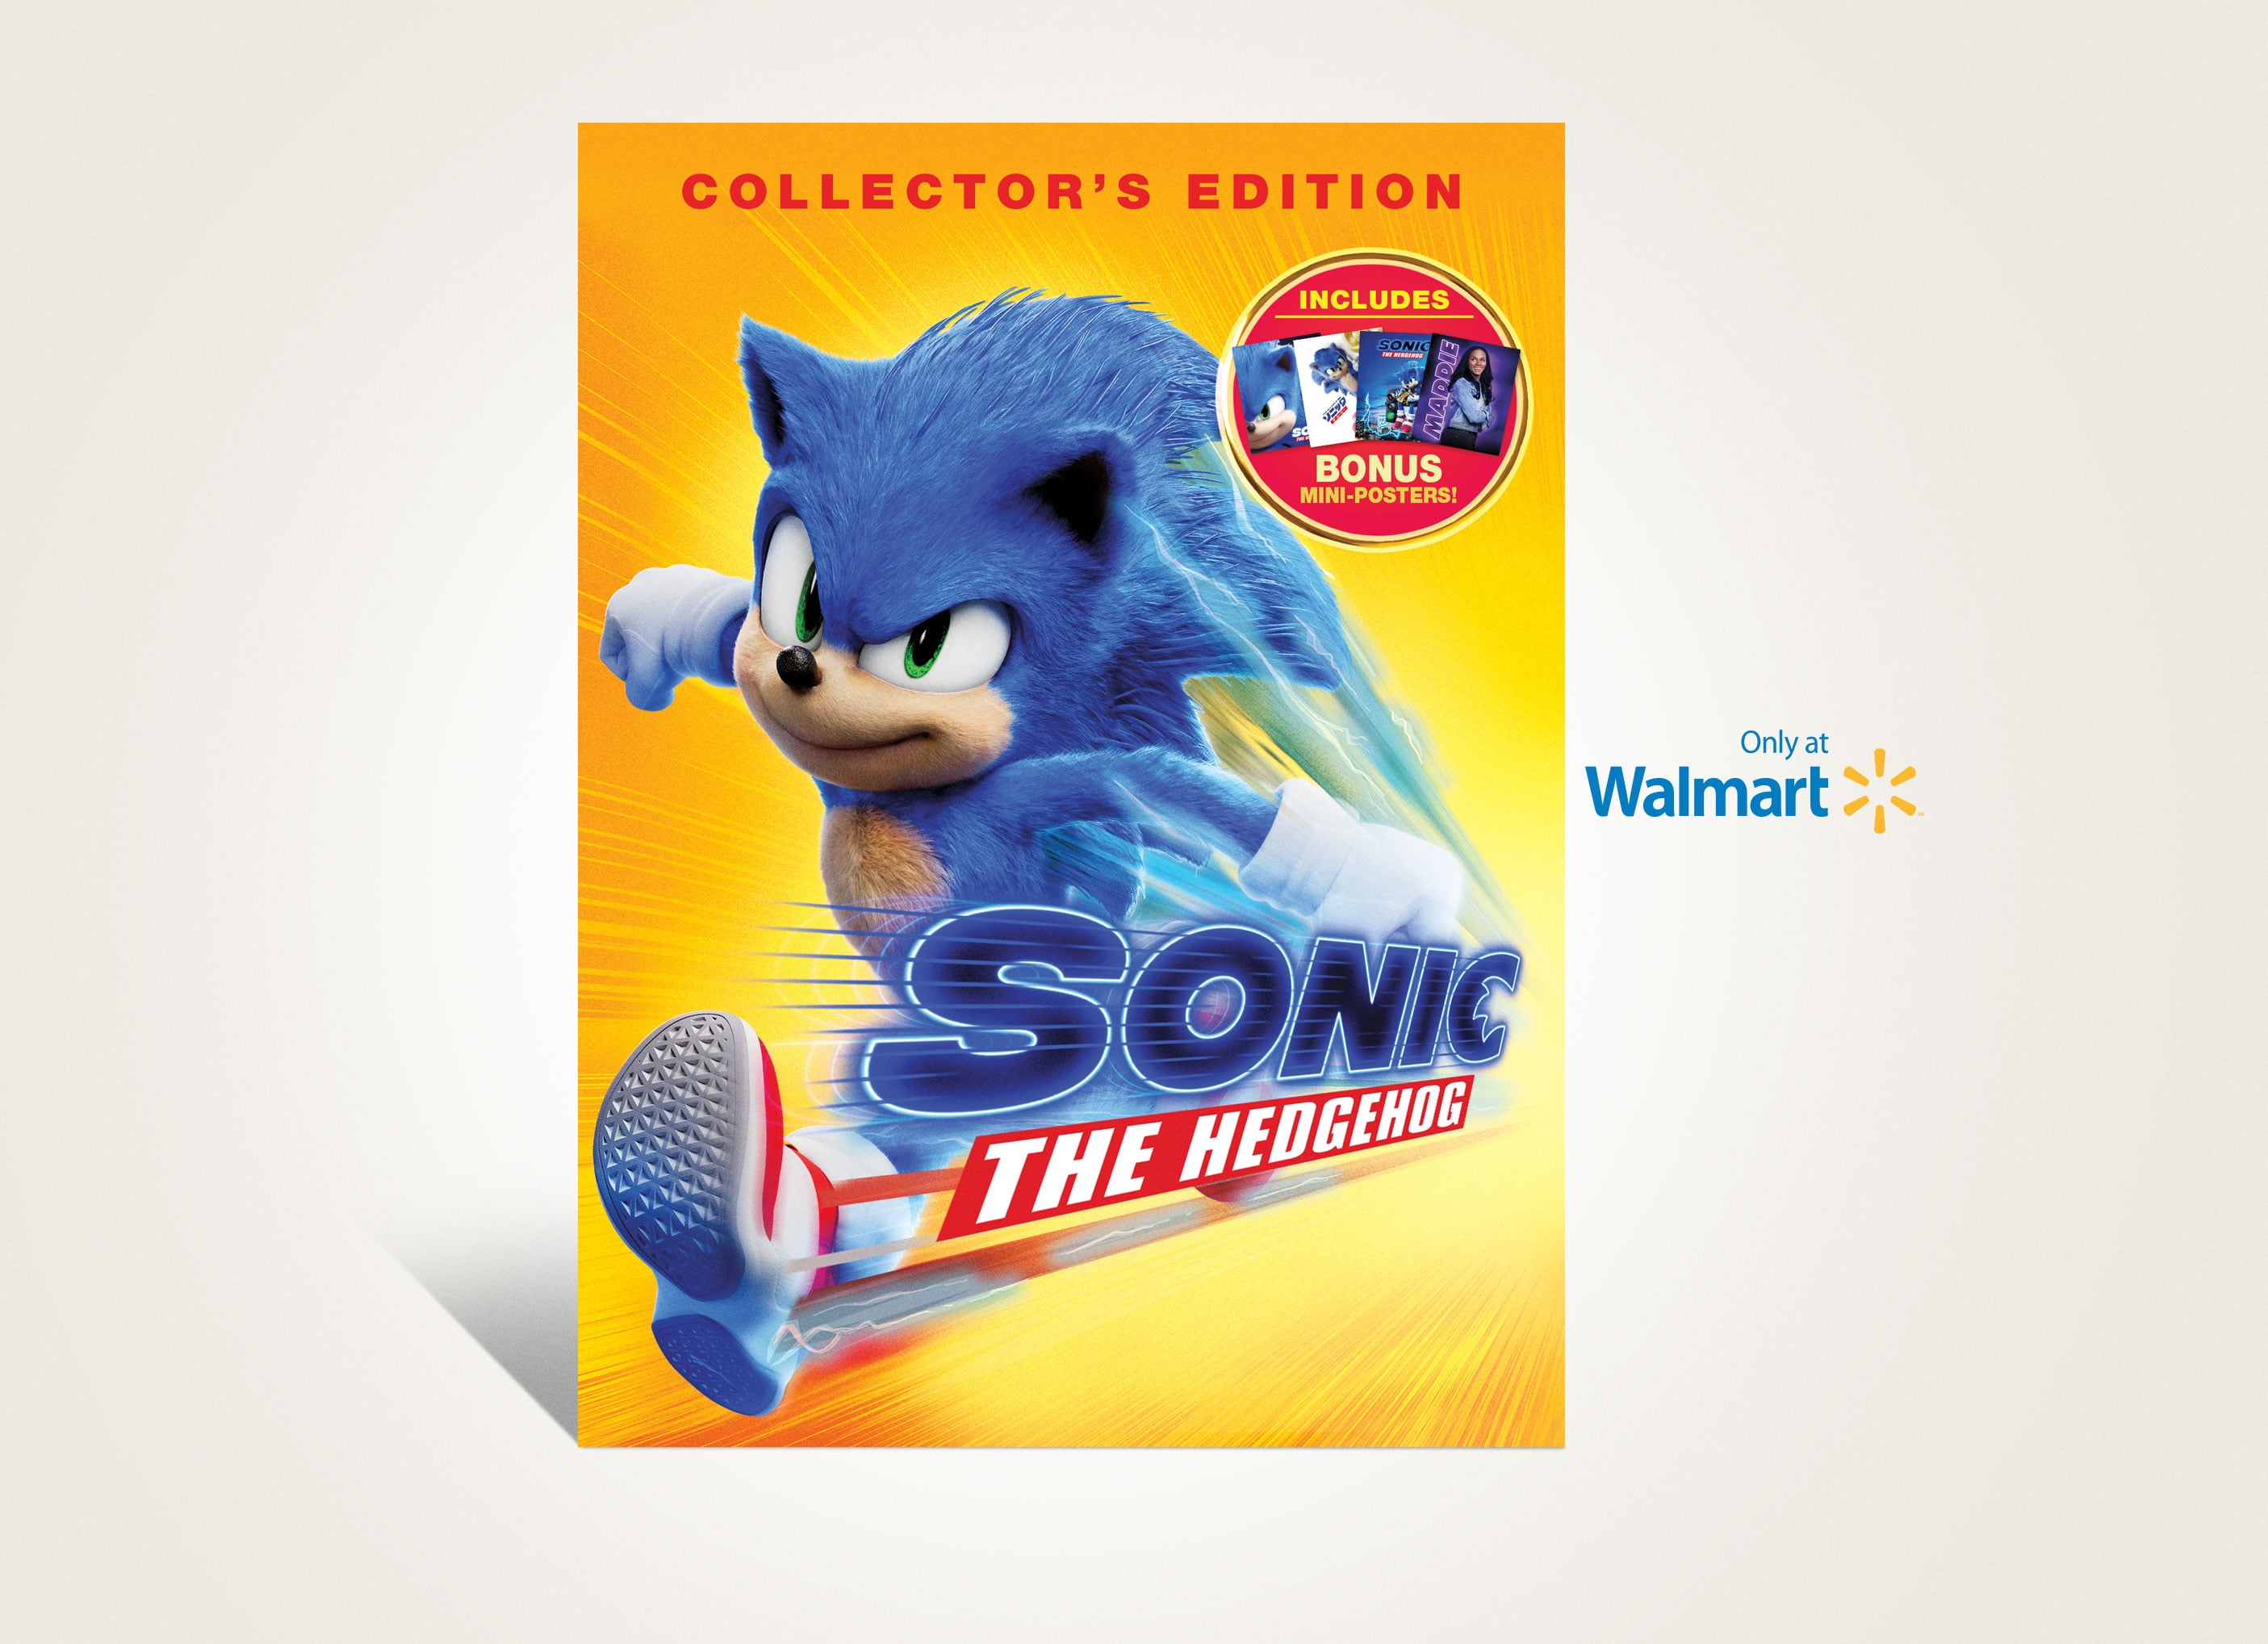  Sonic The Hedgehog (DVD) [2020] : Movies & TV